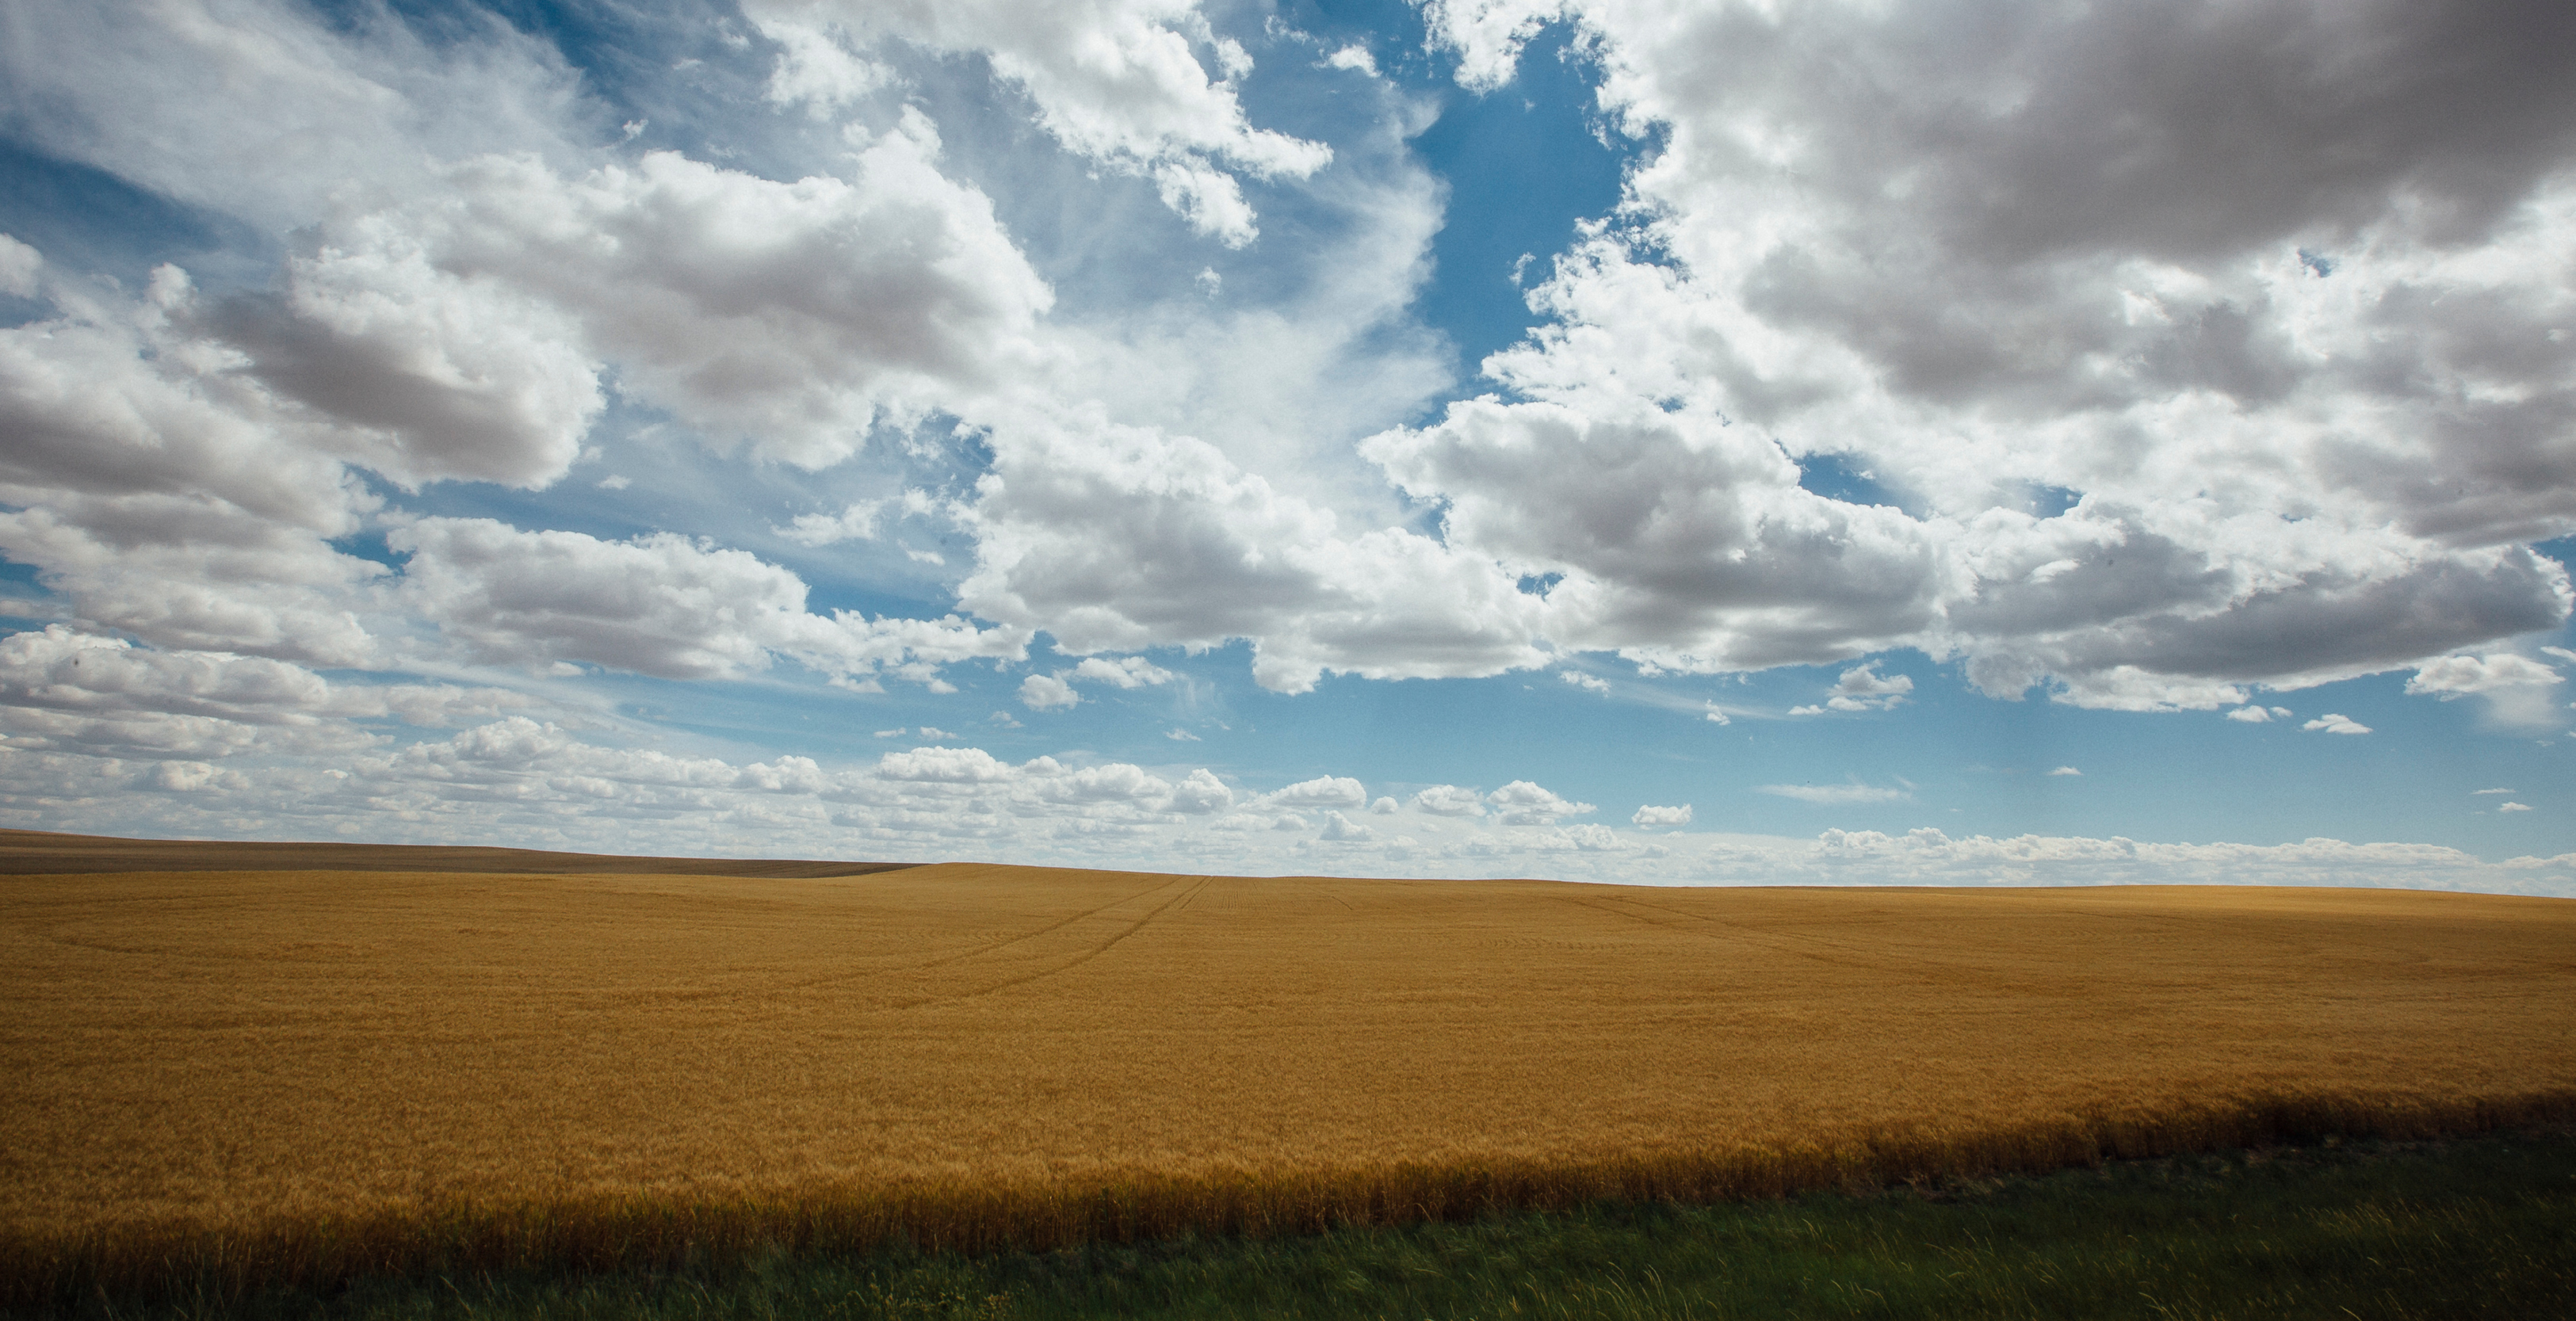 Montana wheat field